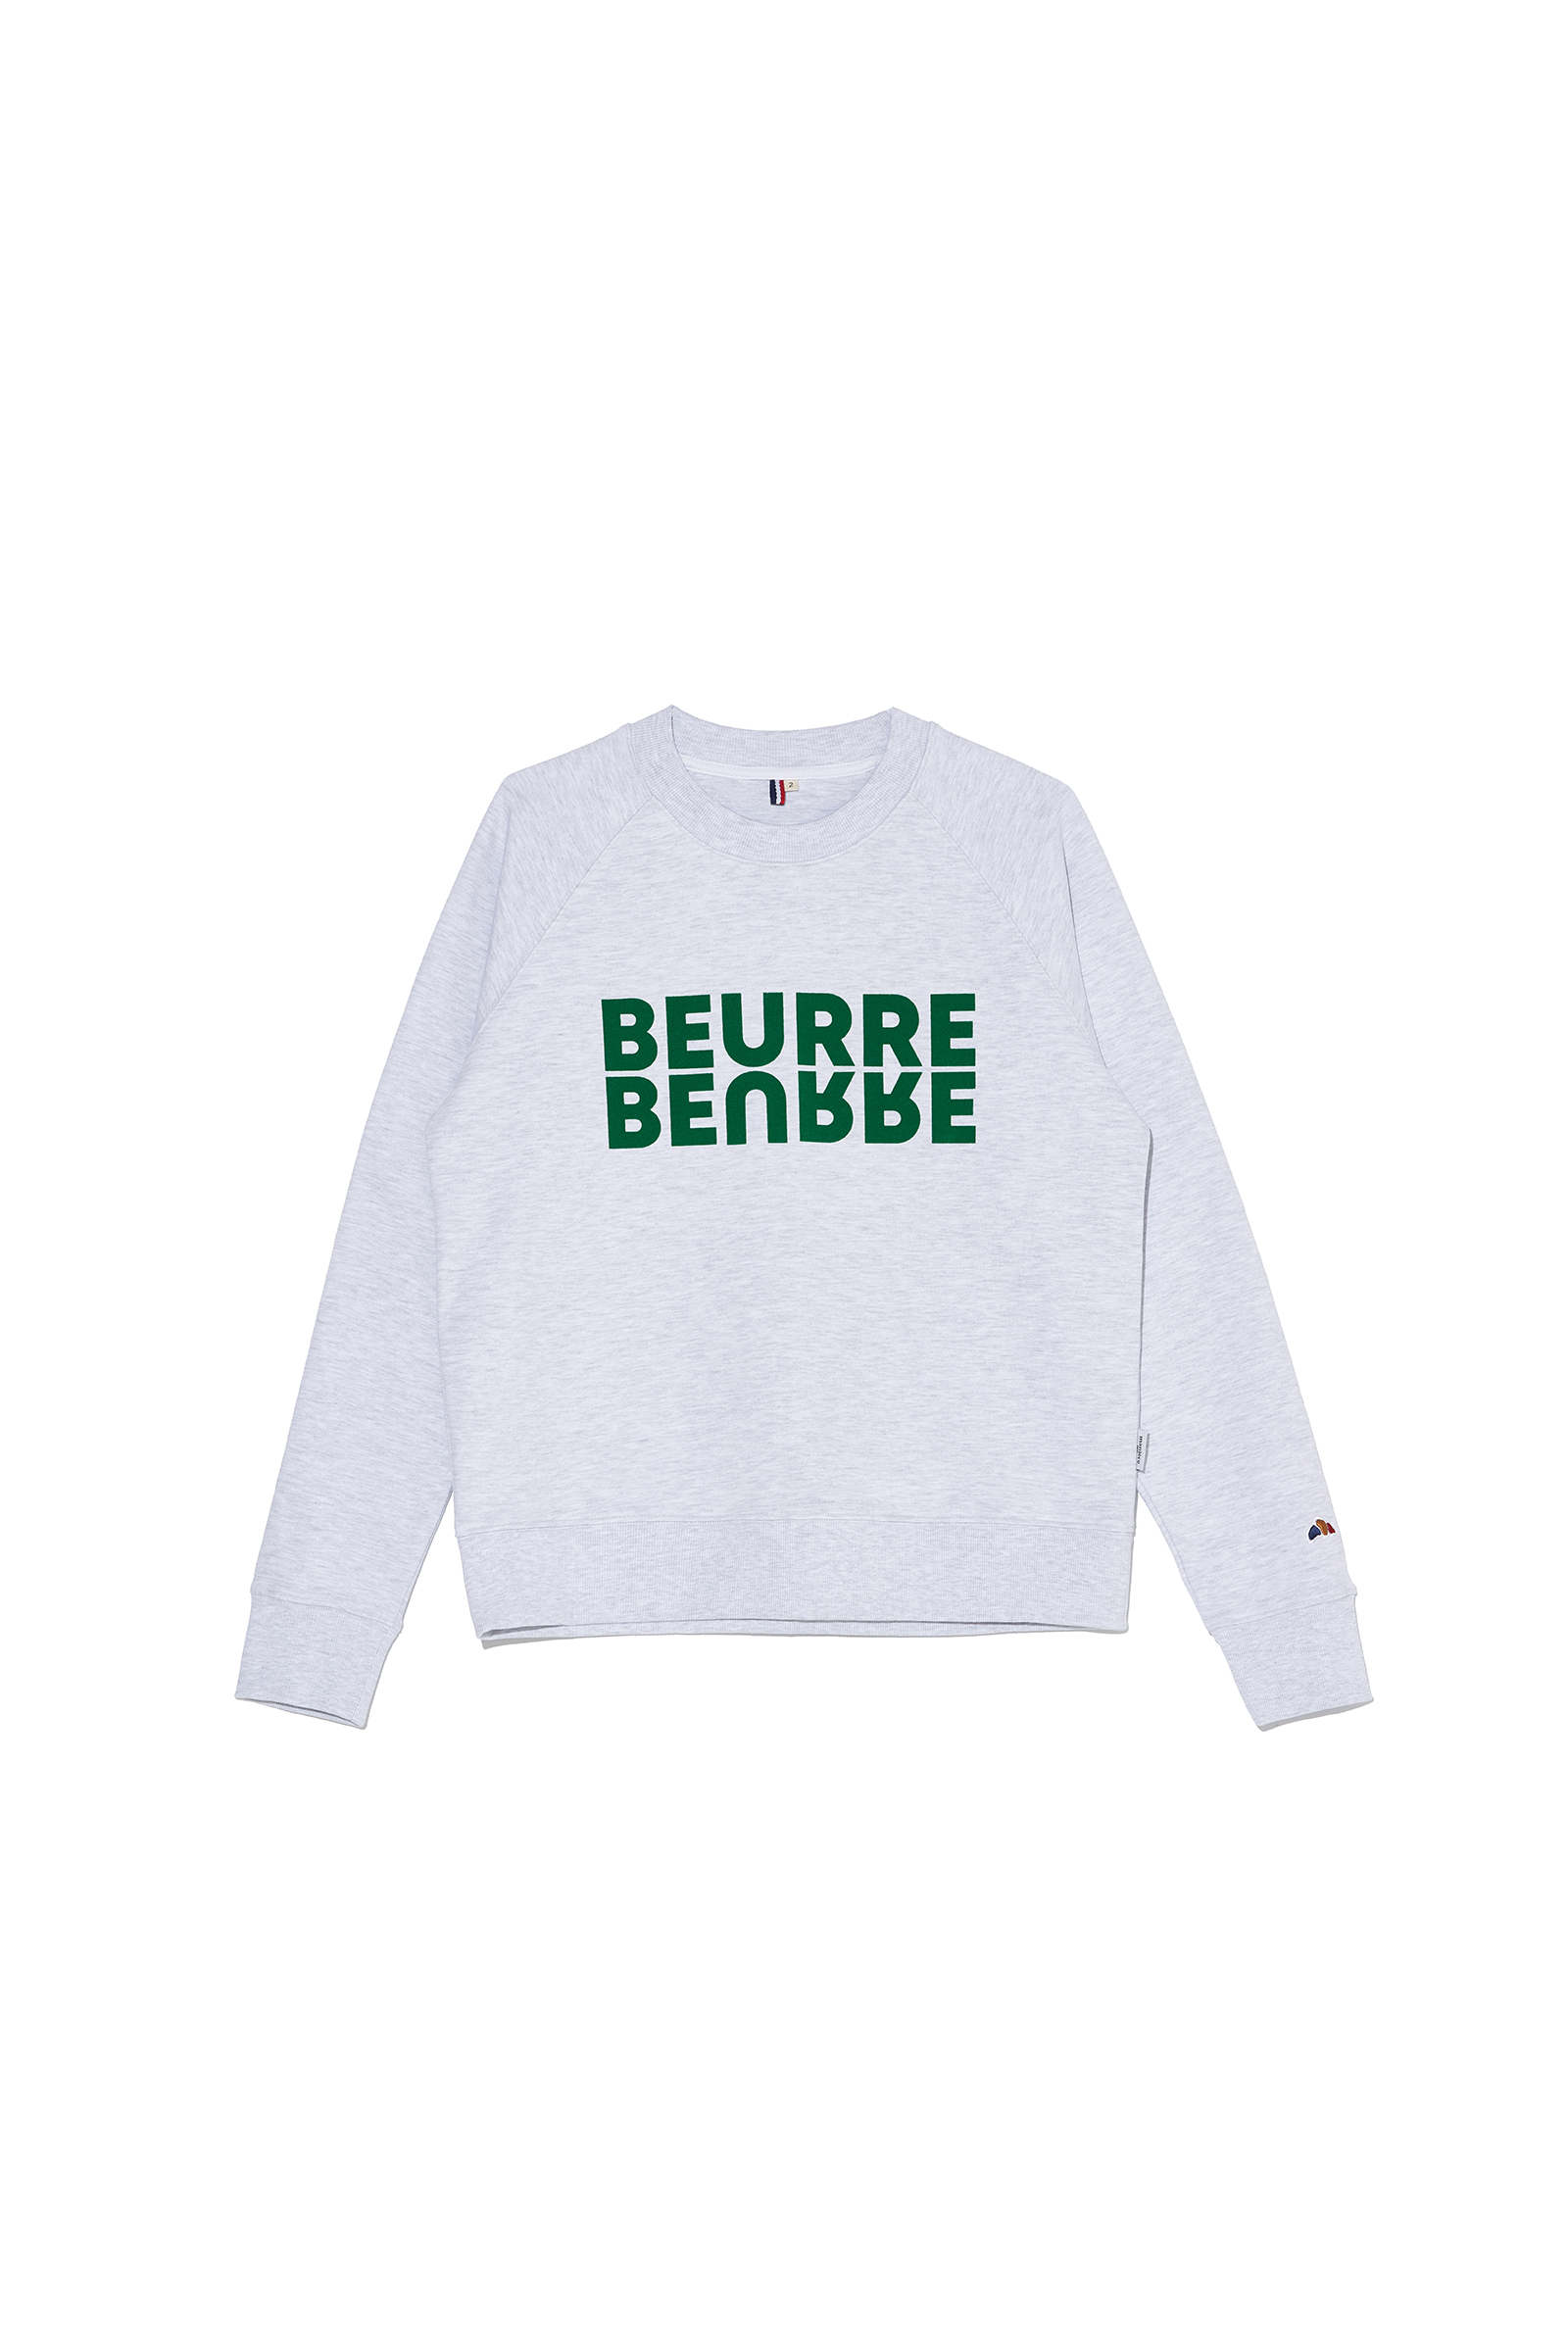 ep.6 BEURRE Decalcomanie sweatshirt (Cool gray)